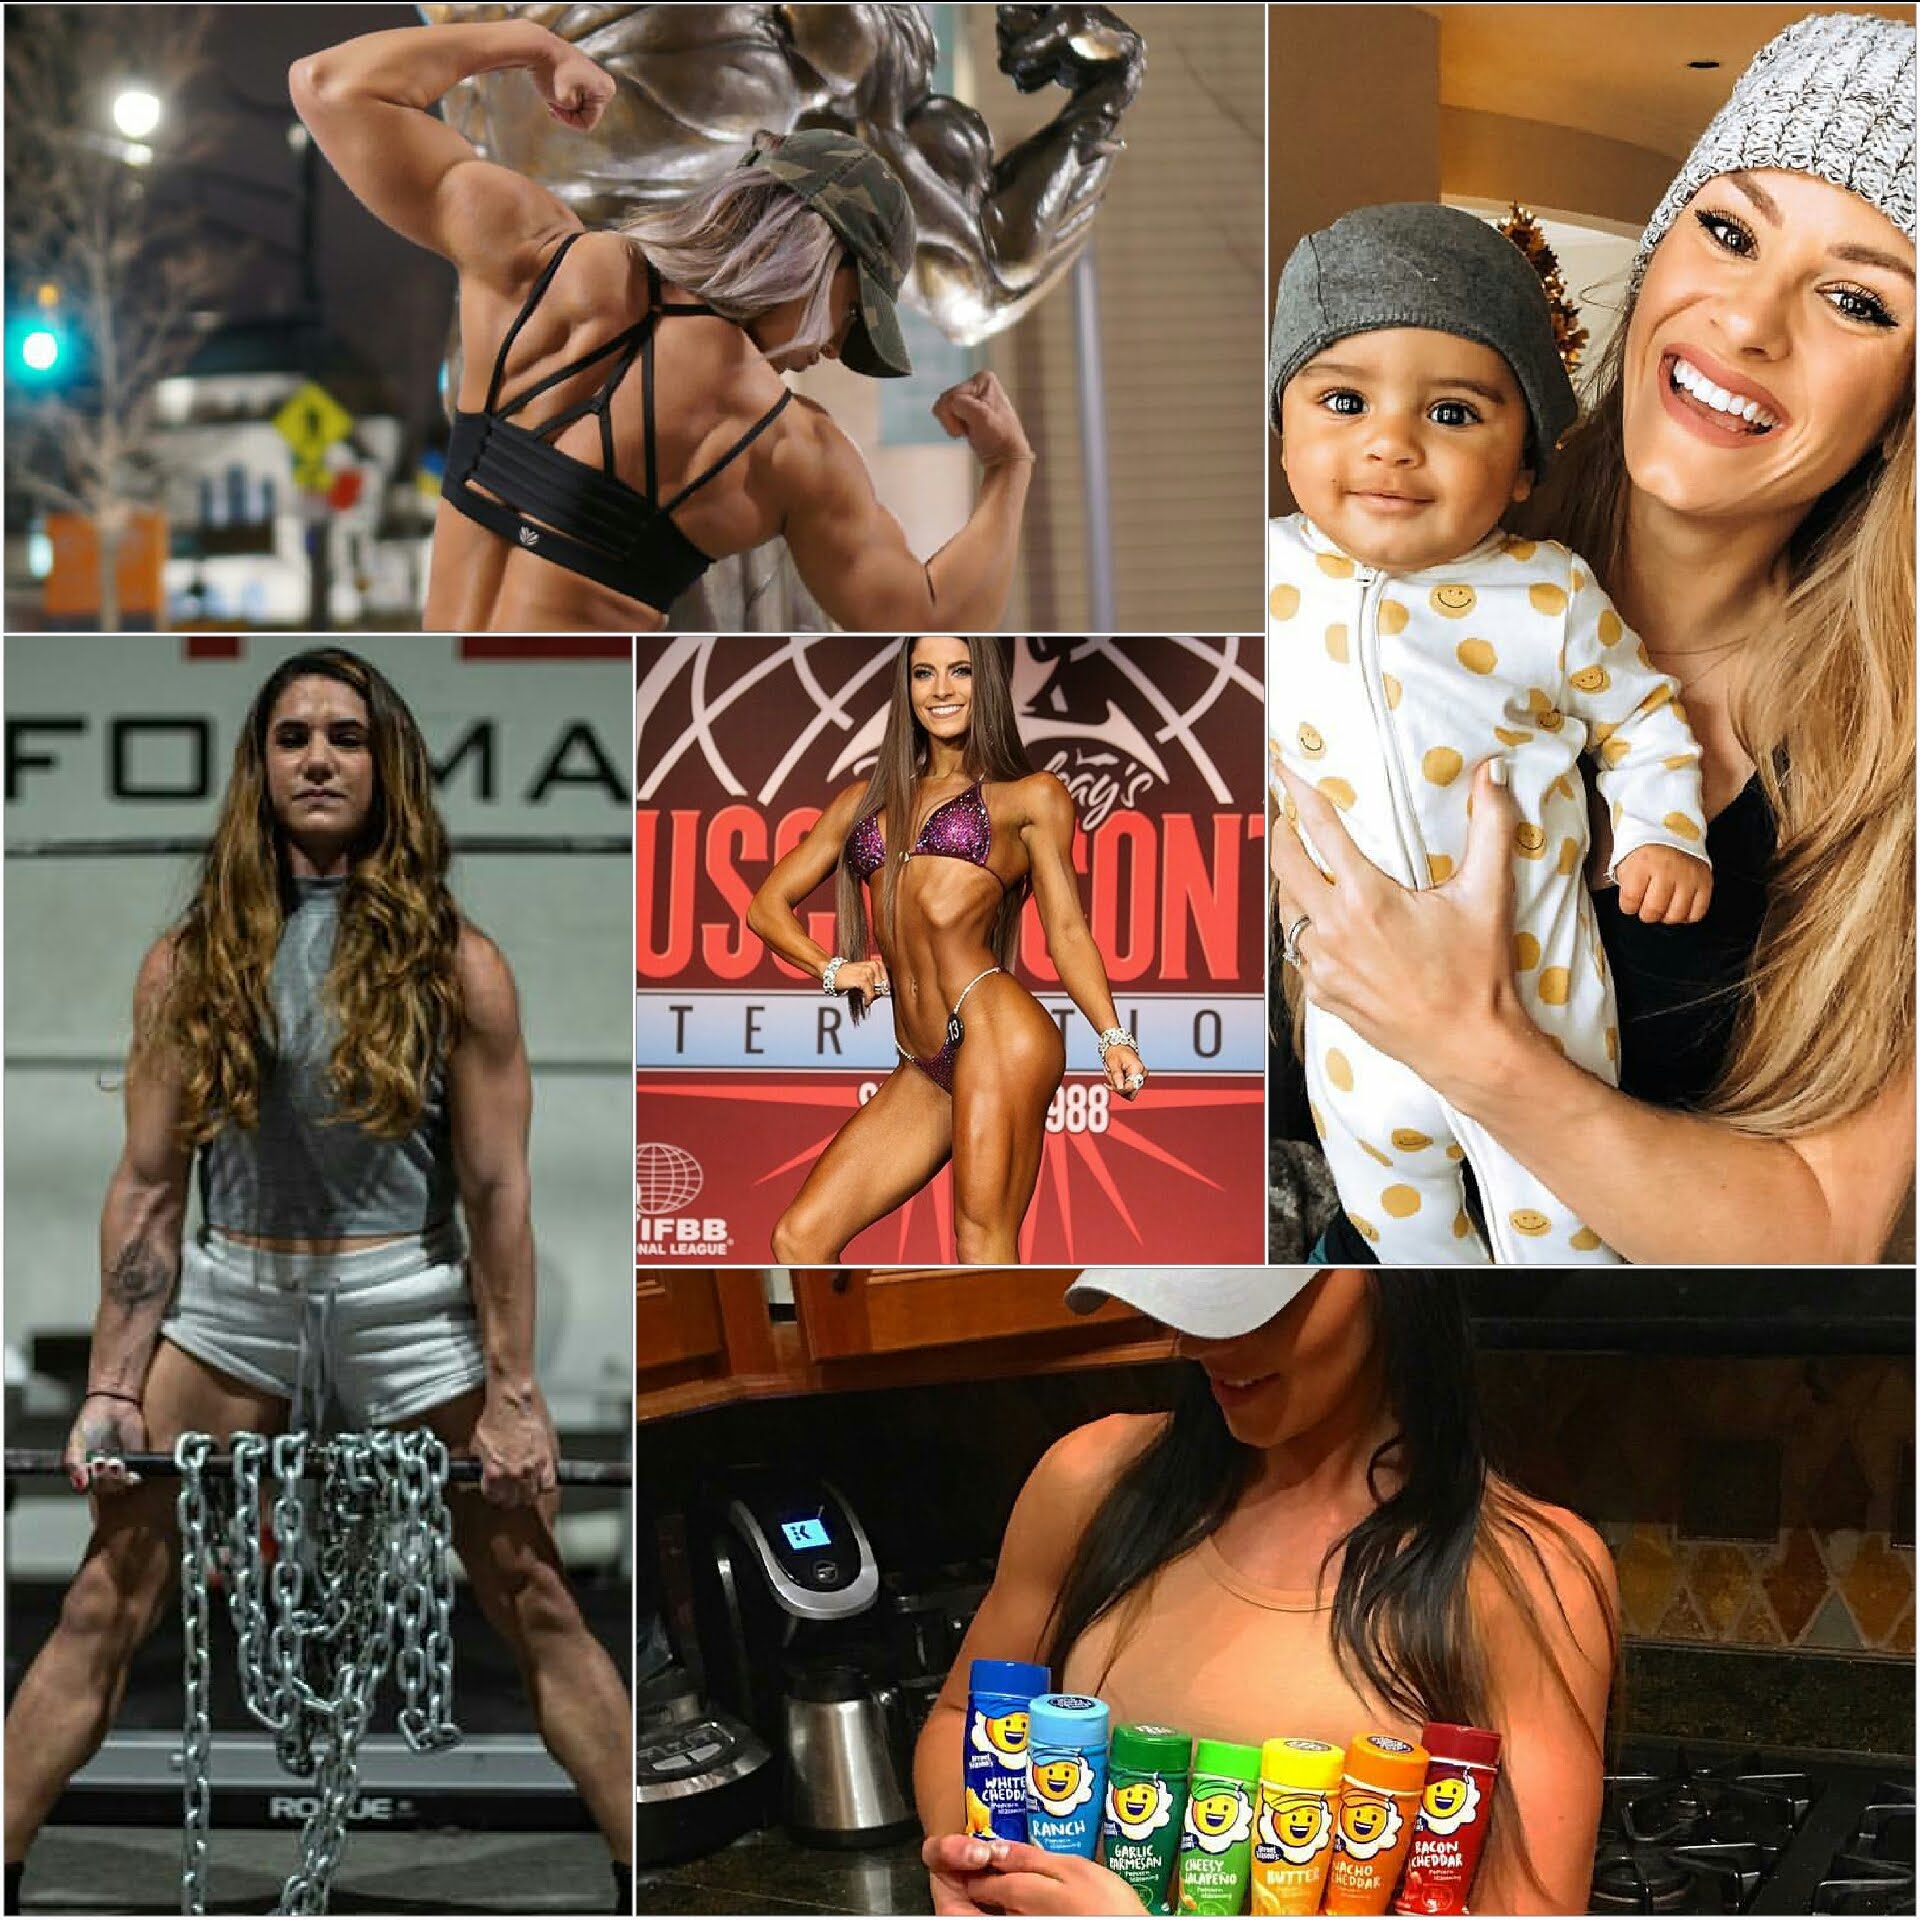 Powerlifter Stefanie Cohen Fitness Workout and pics  Powerlifting women,  Body building women, Fitness girls